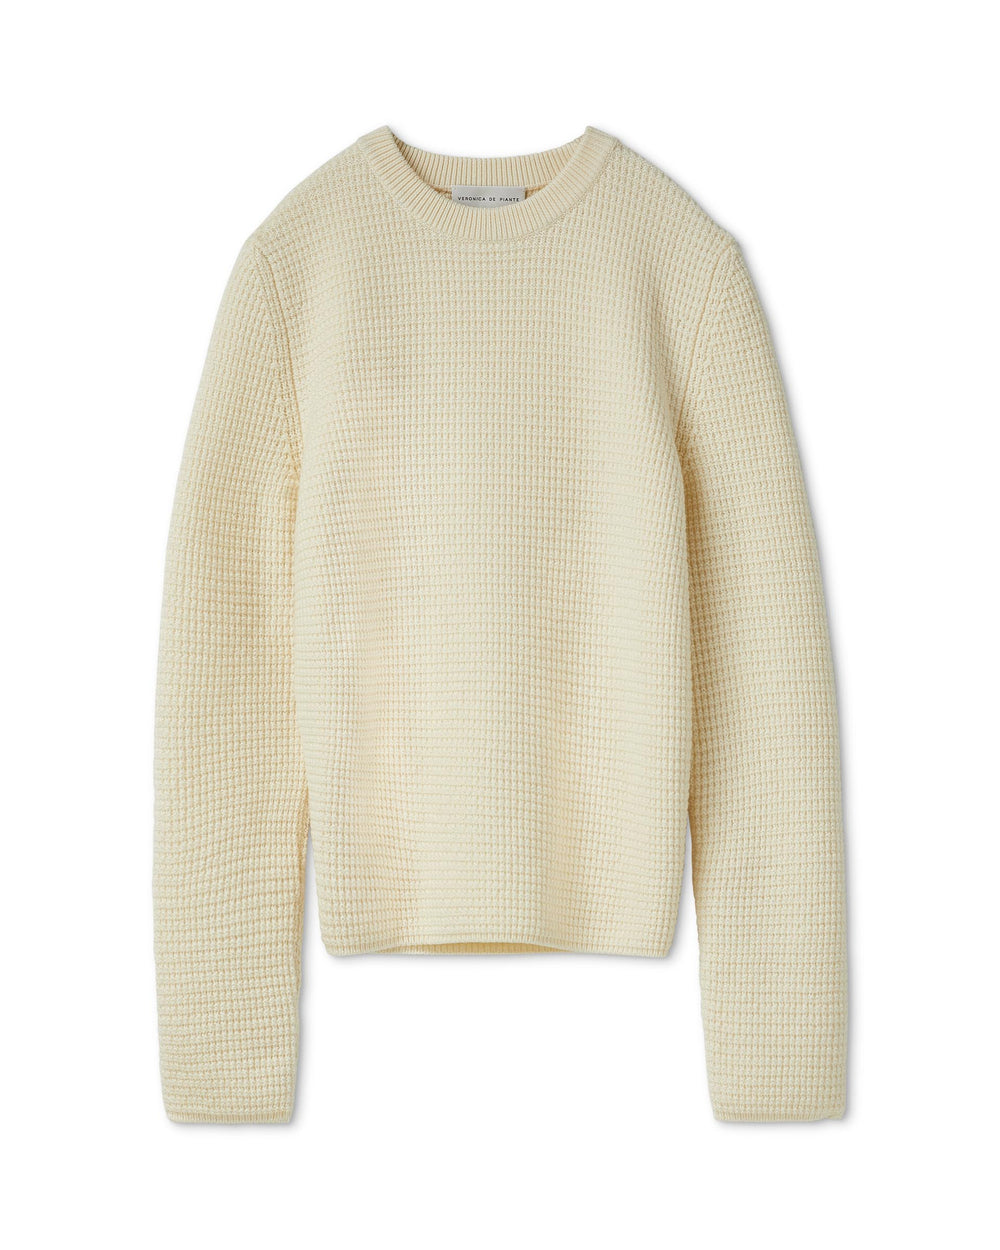 Chloe Sweater in Merino Wool, Ivory